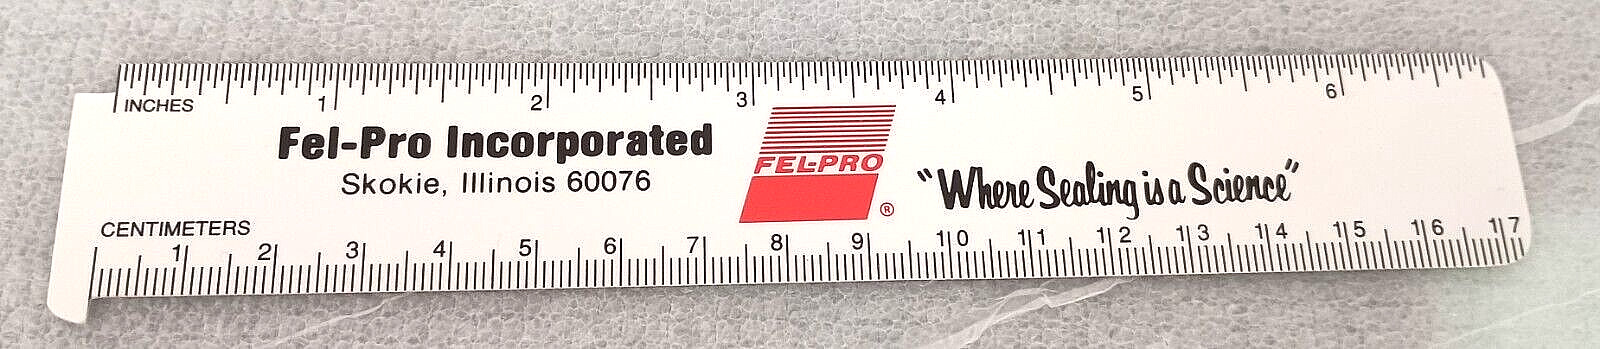 2 Fel-Pro Inc. Plastic Idus. Gaskets Slide Ruler Promo 1980s NOS New Skokie Il